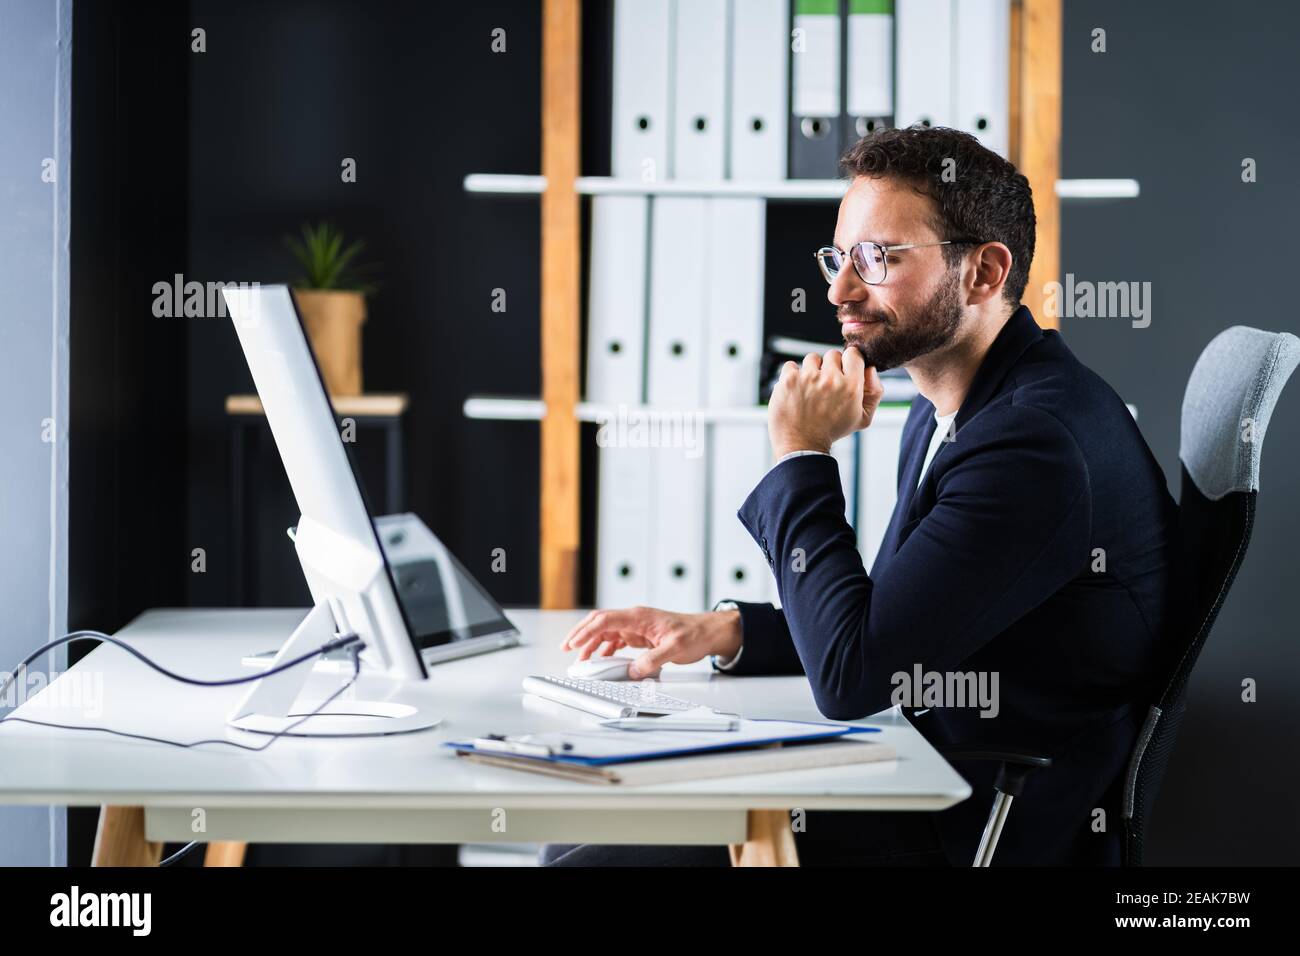 Employee Using Business Computer Stock Photo